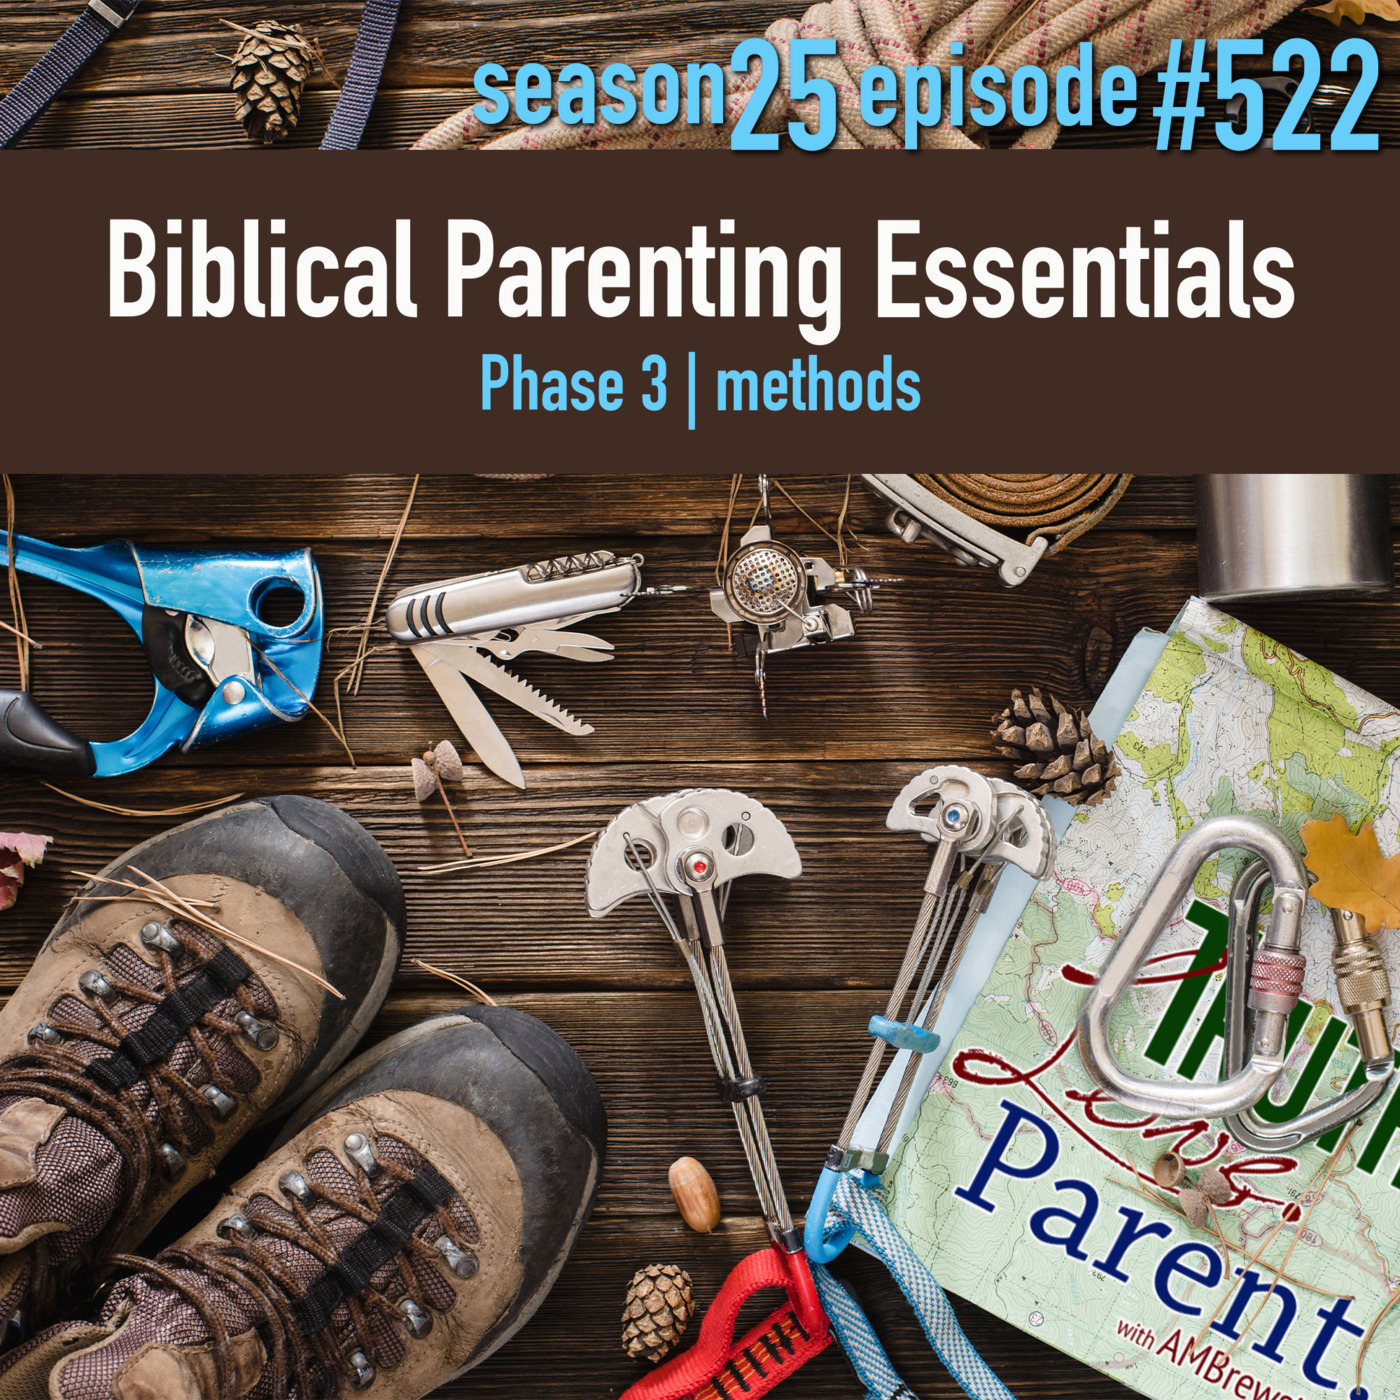 Episode 522: TLP 522: Biblical Parenting Essentials, Phase 3 | methods